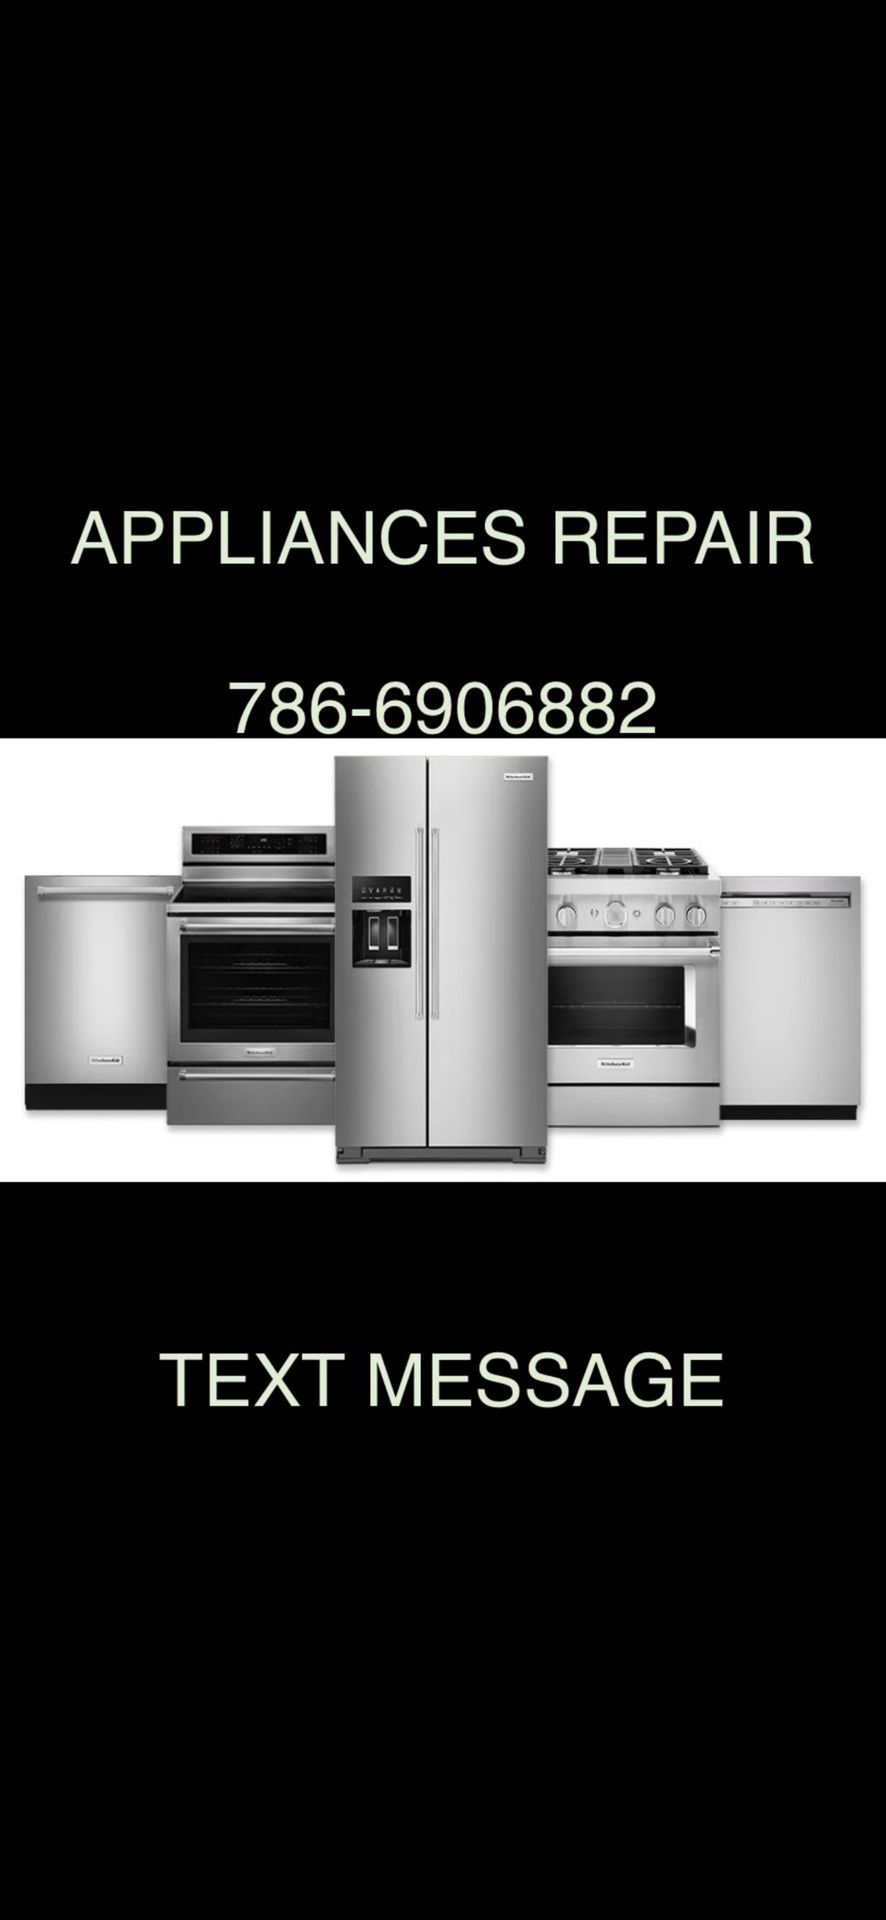 Sale / Repair of household appliances. 